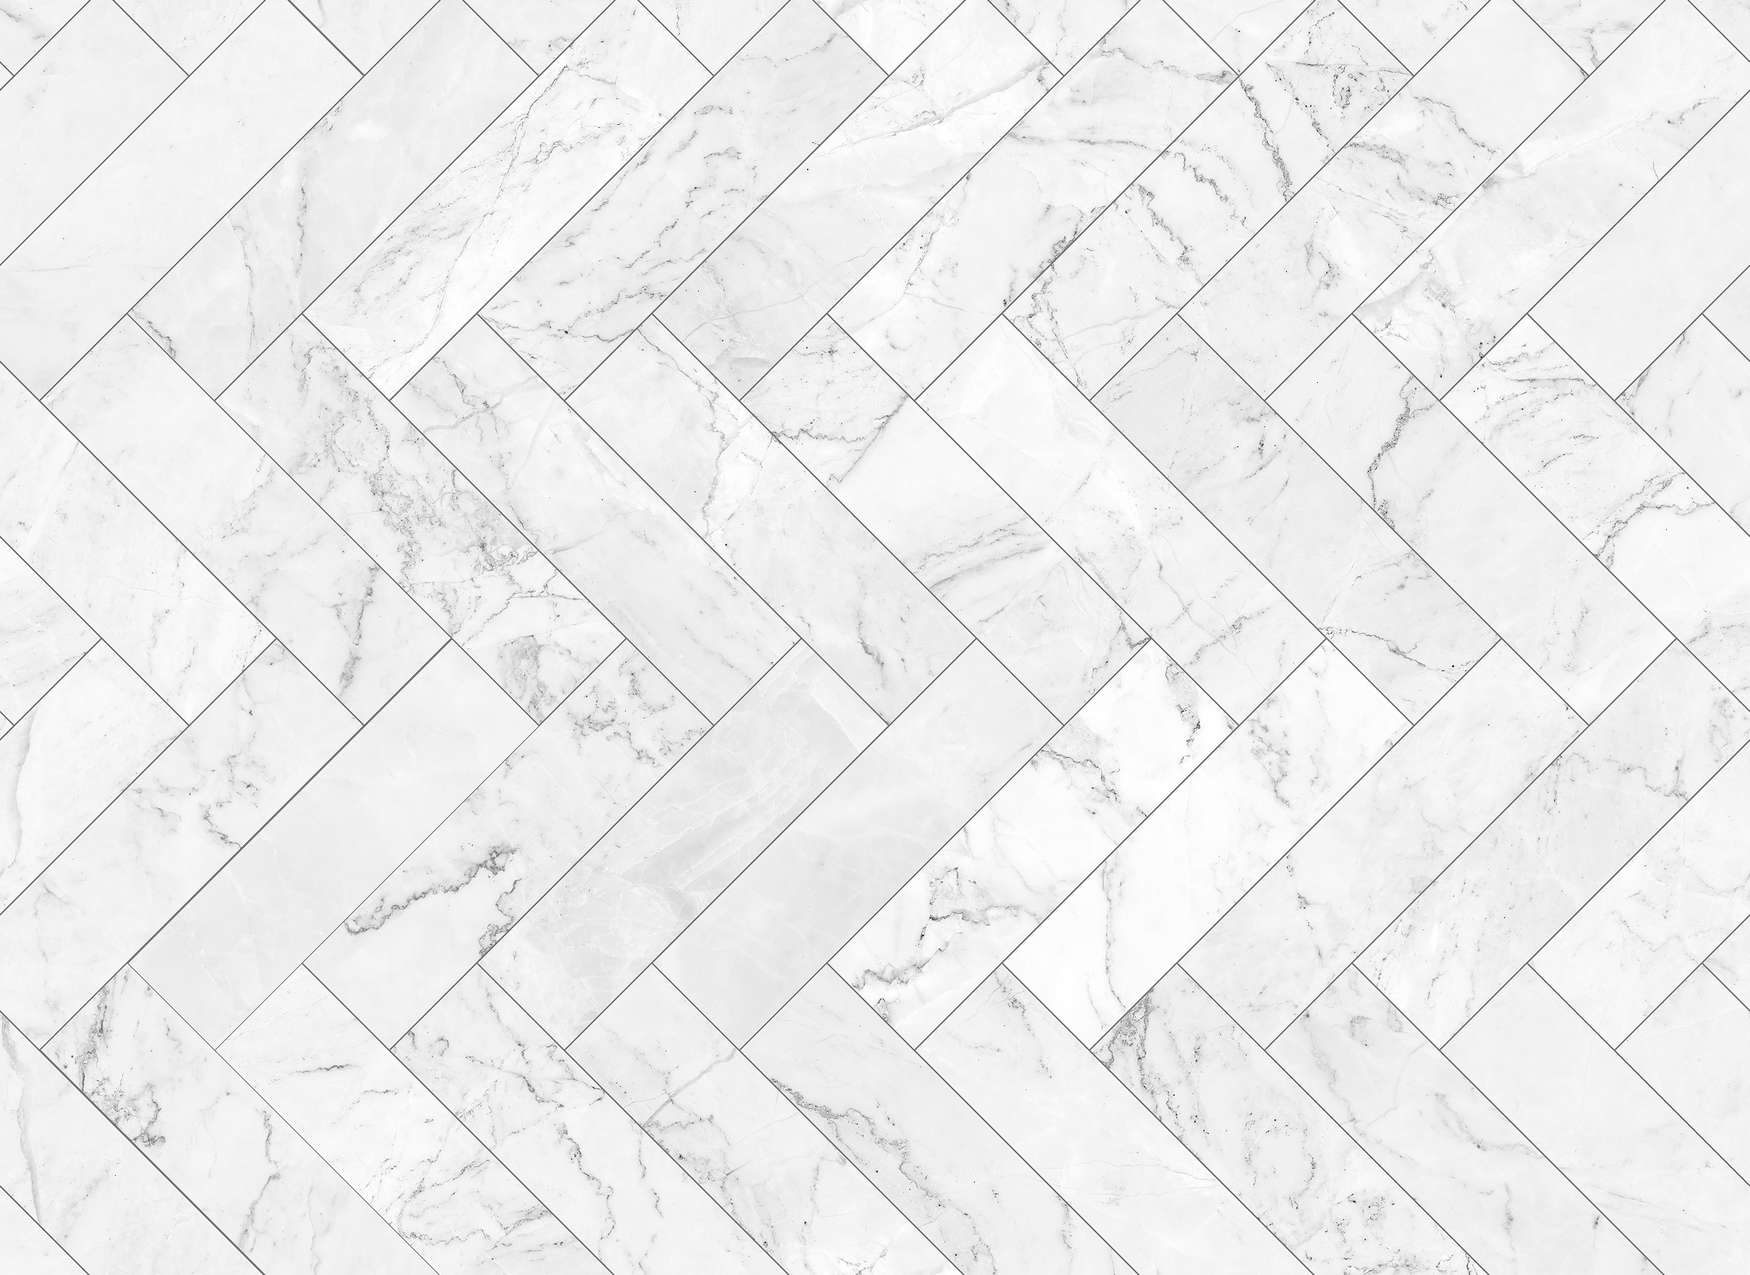             Marble Wallpaper Tile Pattern - Grey, White, Black
        